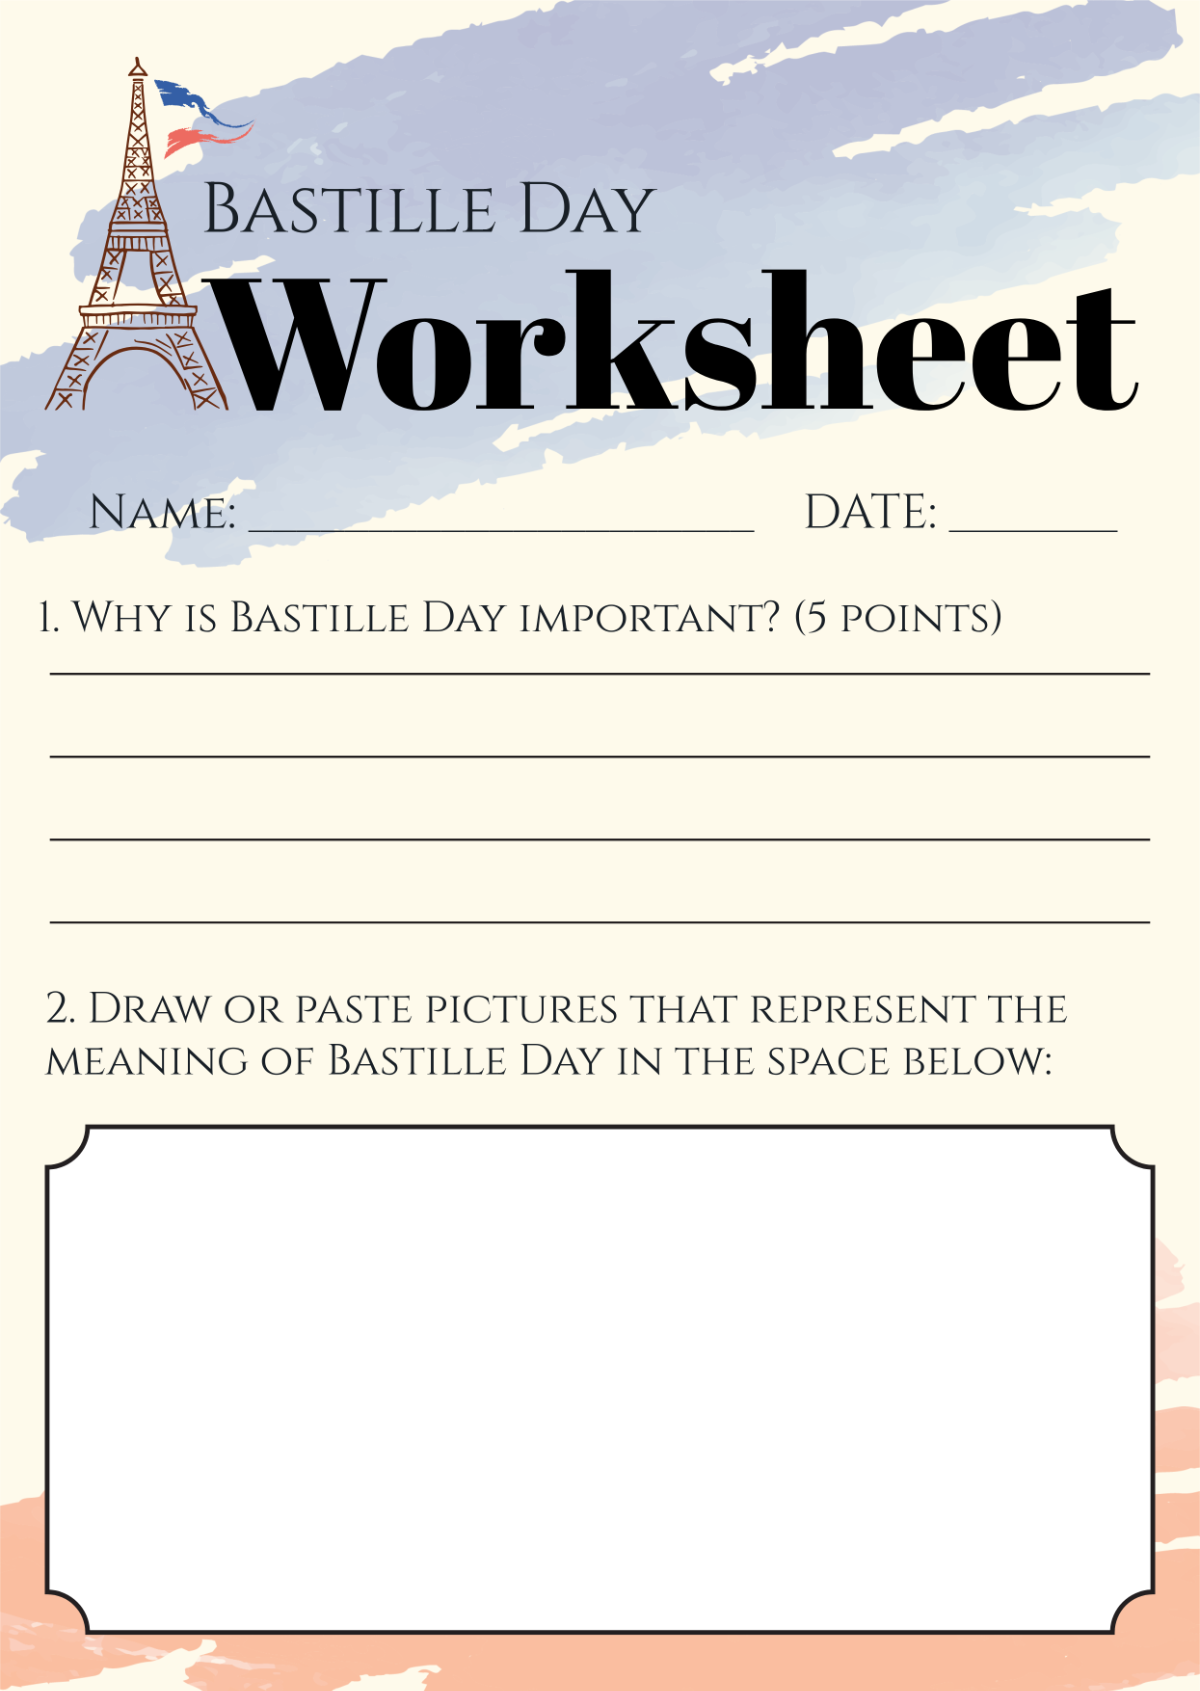 Bastille Day Worksheet